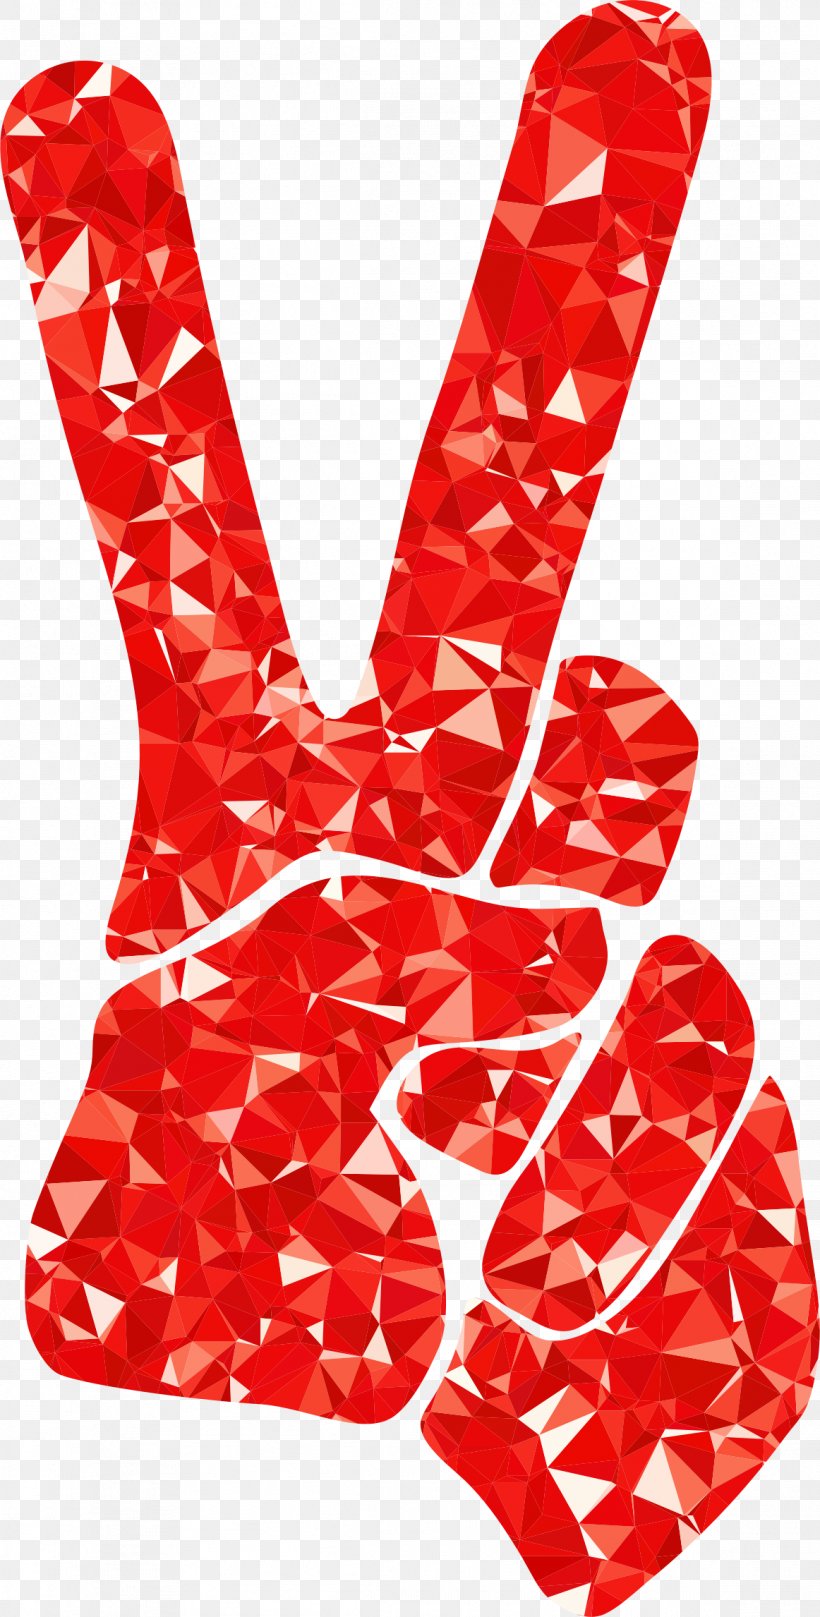 V Sign Peace Symbols Clip Art, PNG, 1162x2292px, V Sign, Finger, Hand, Peace, Peace Symbols Download Free